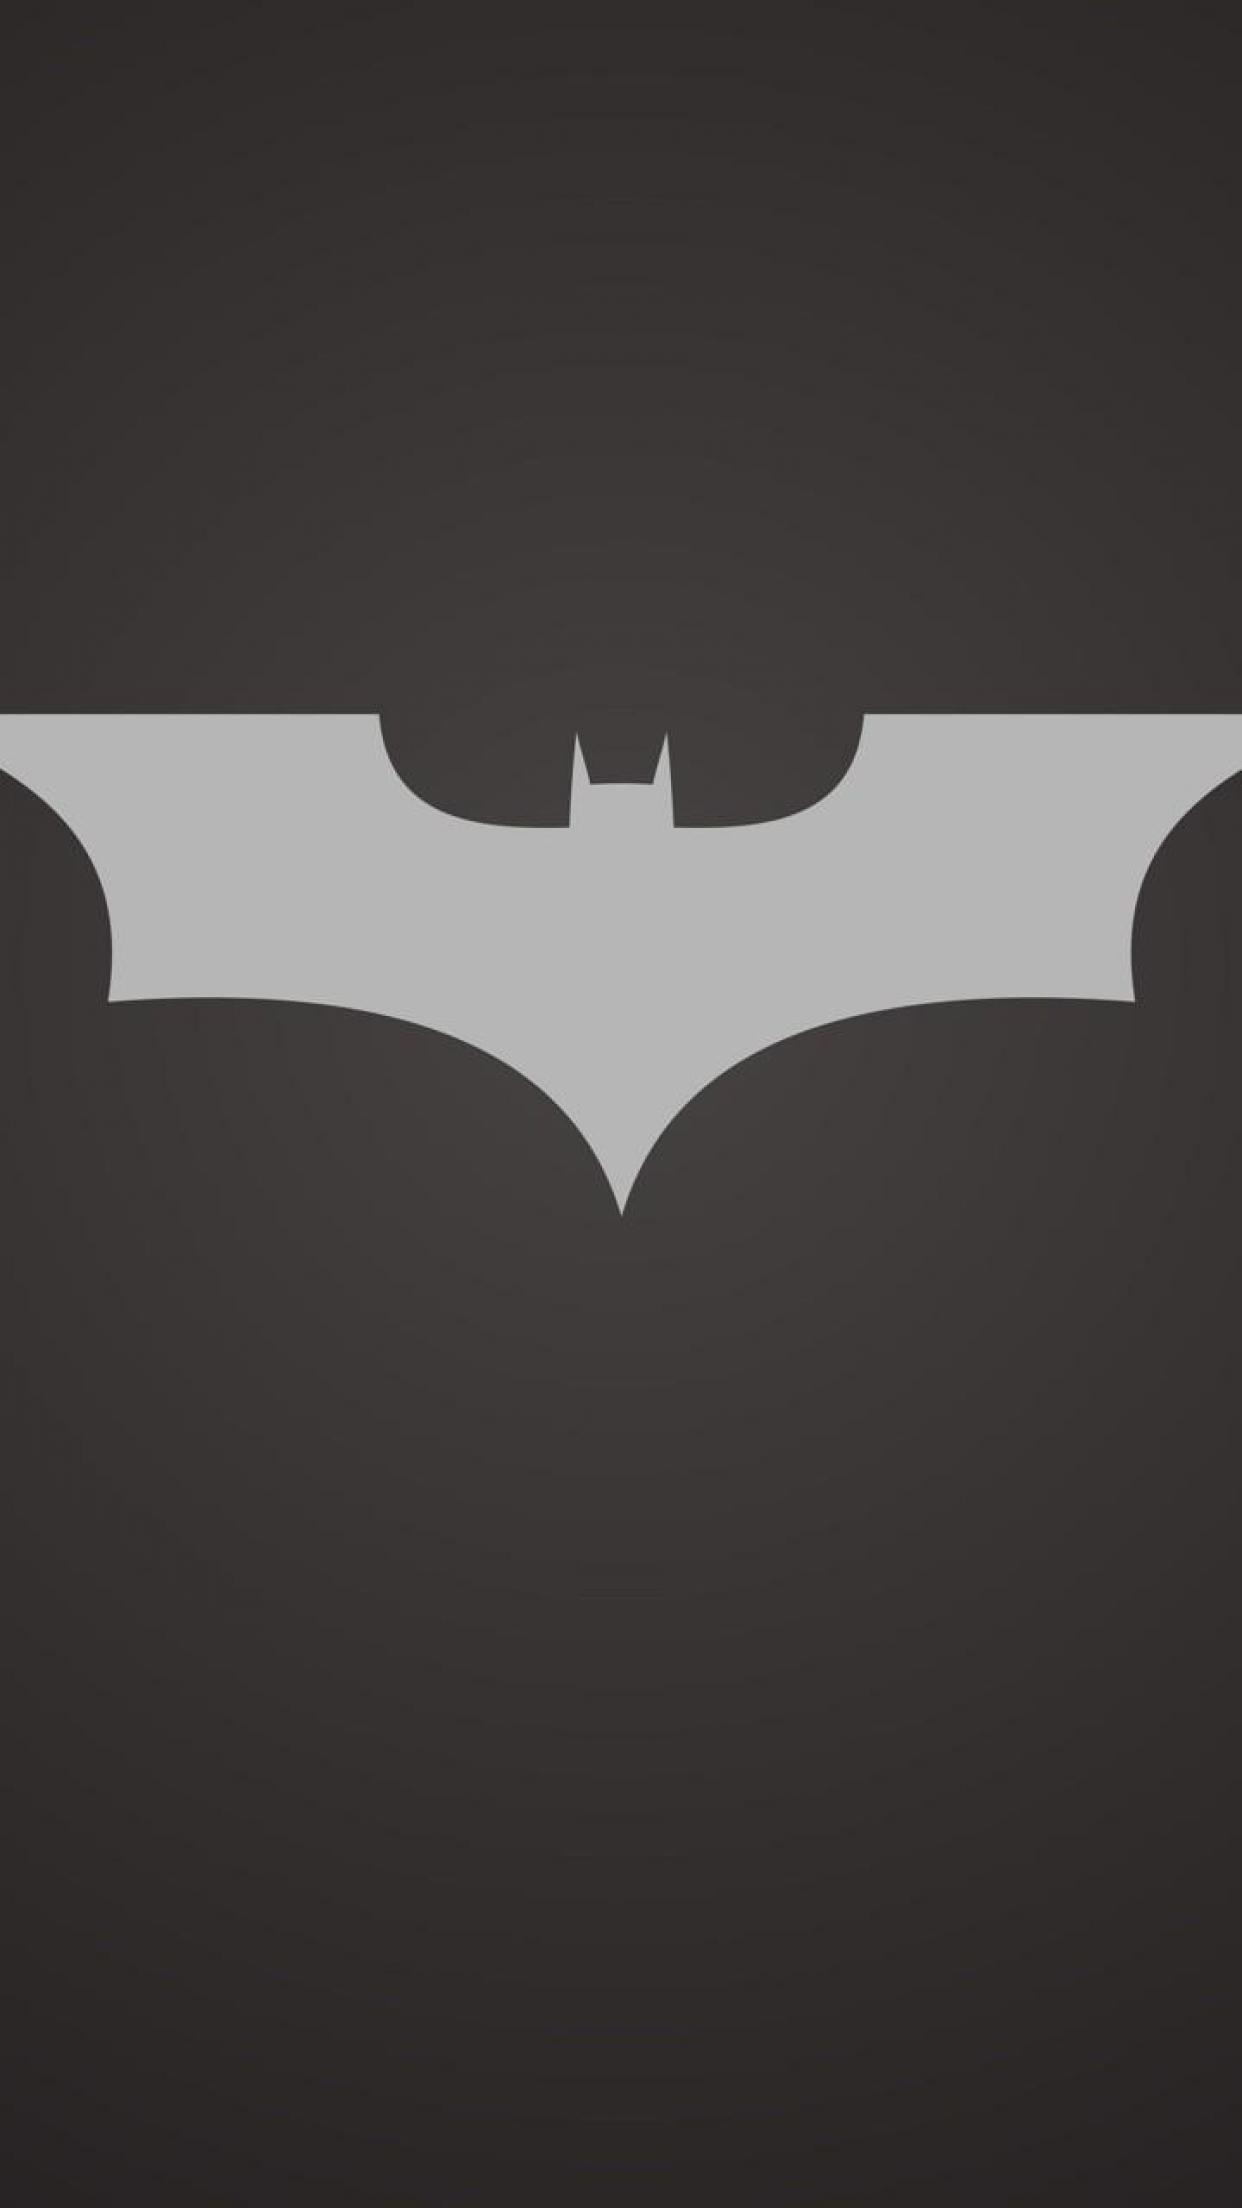 Batman wallpapers for iPhone in 2023  iGeeksBlog